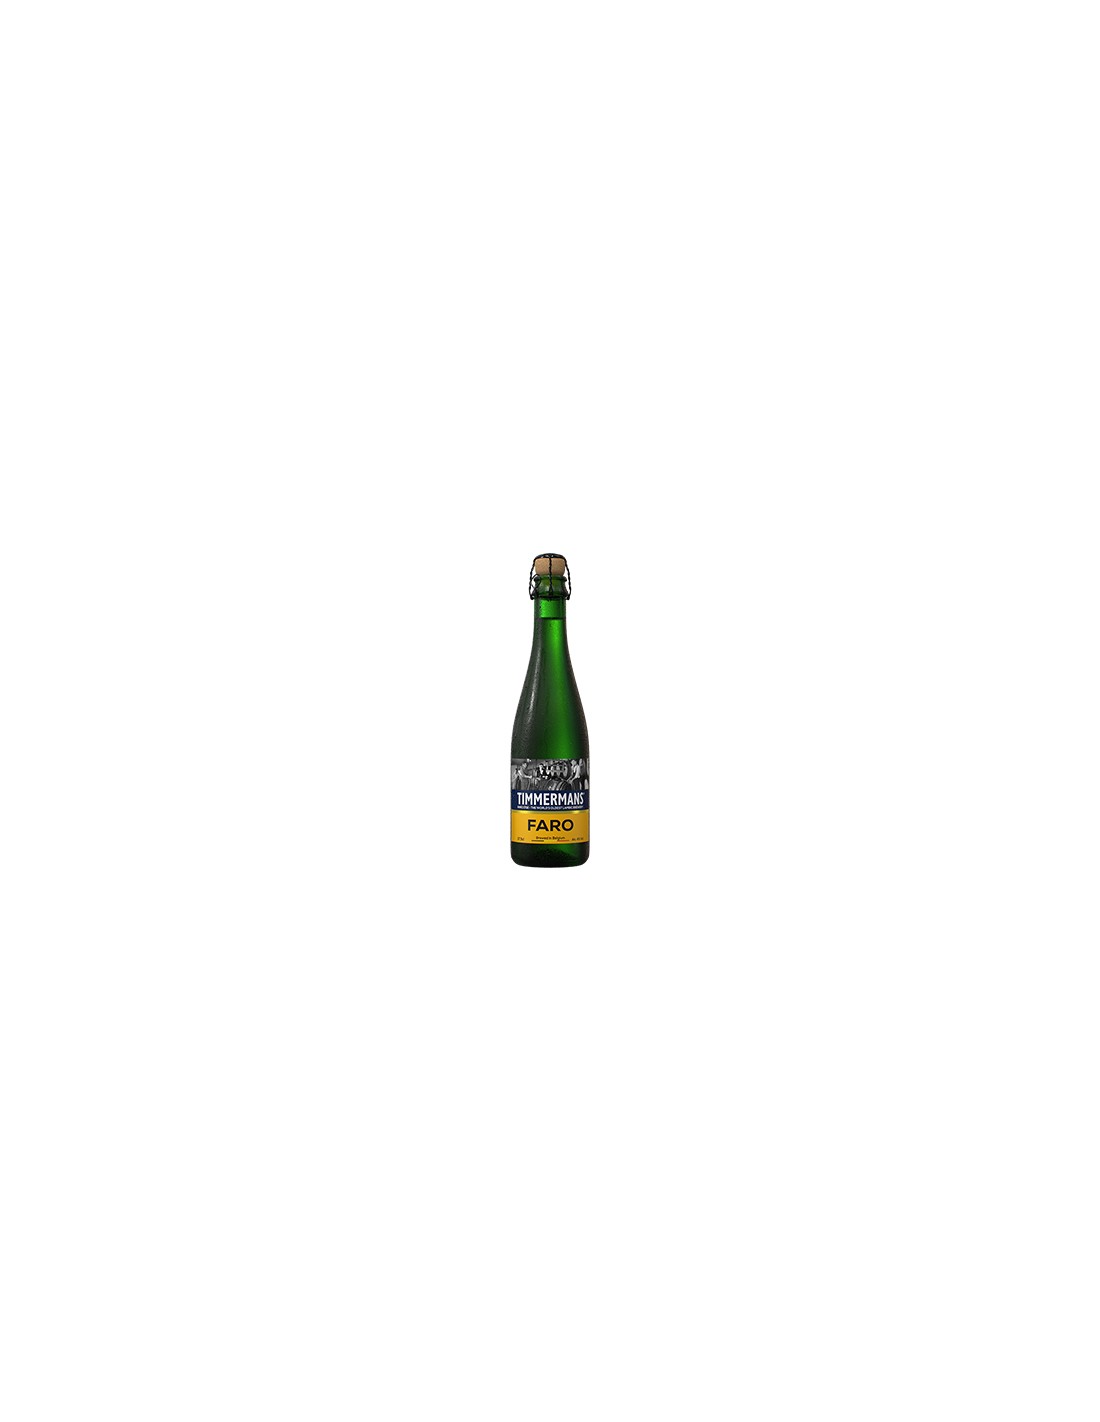 Bere blonda Timmermans Faro, 4% alc., 0.375L, sticla, Belgia alcooldiscount.ro